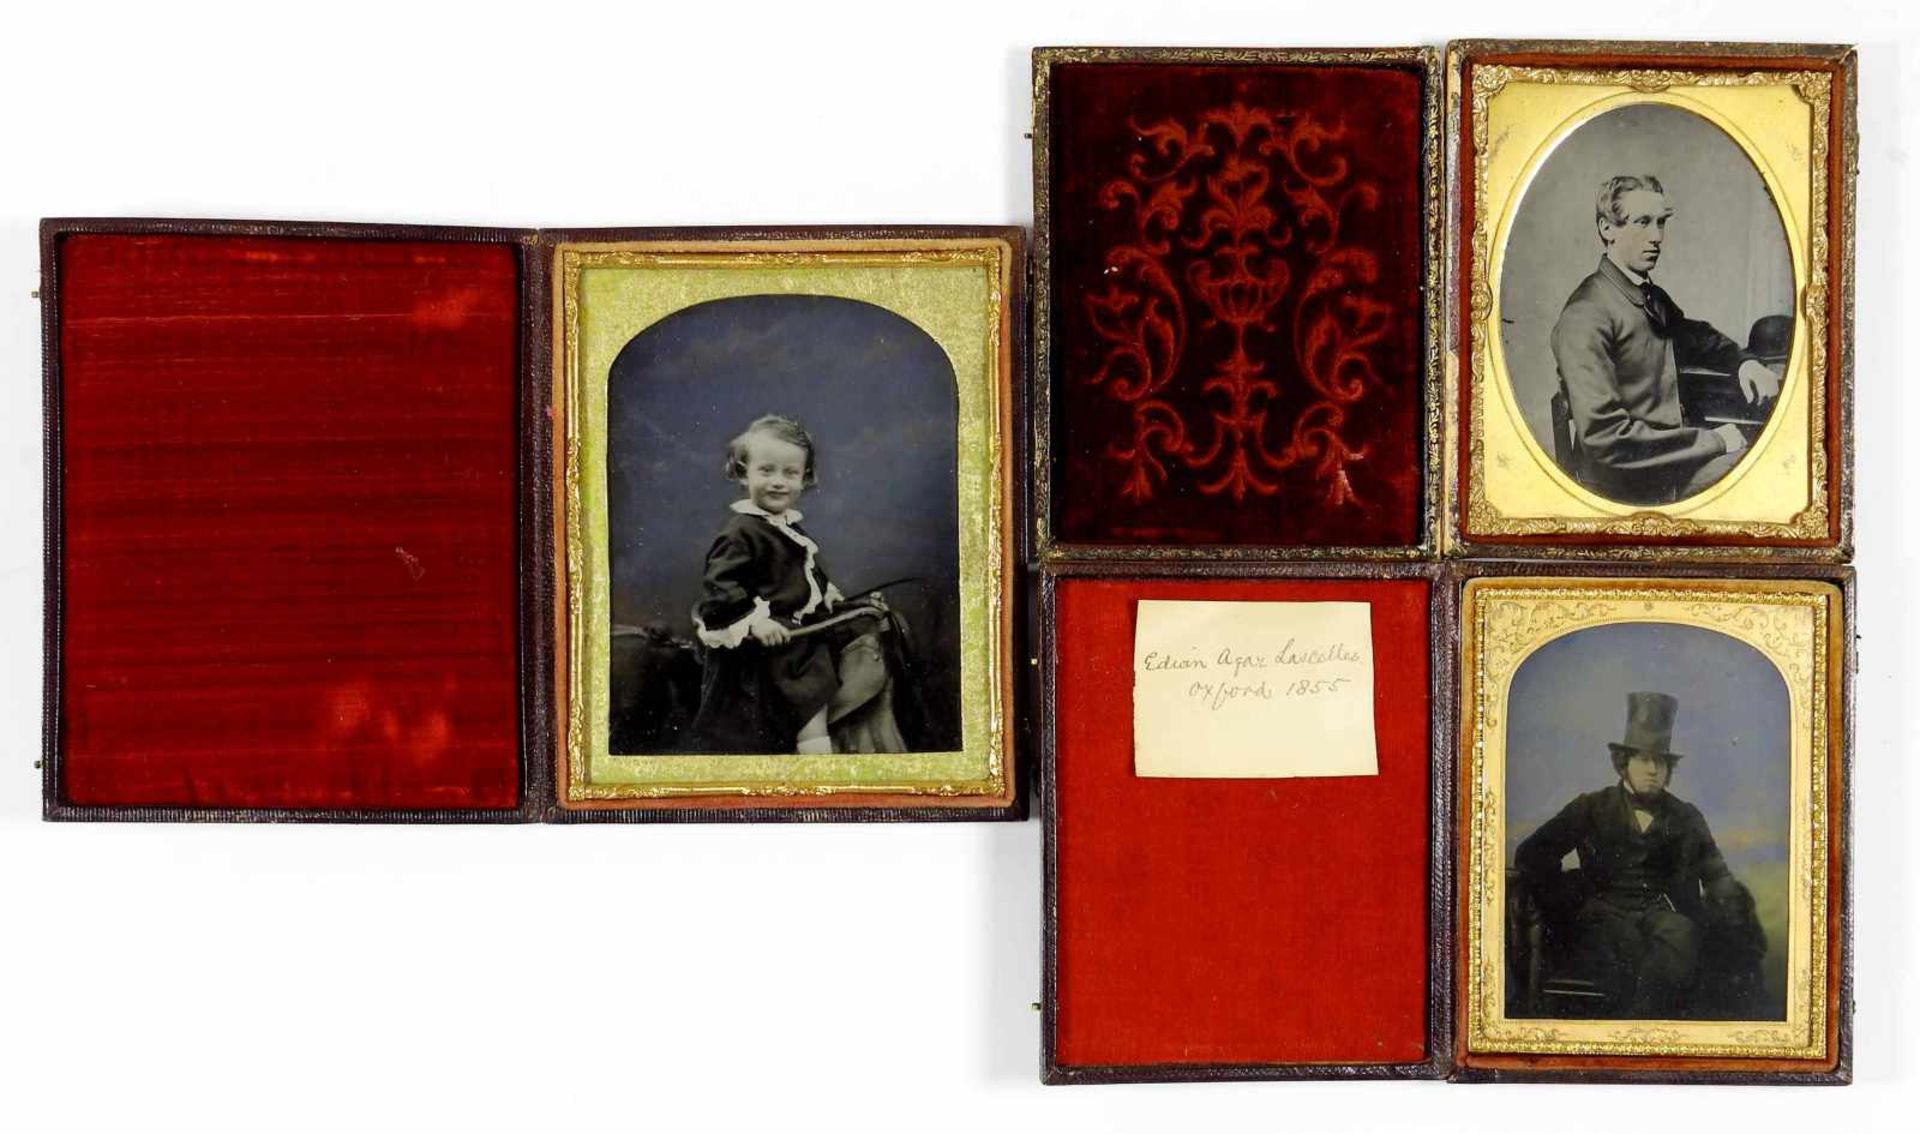 Ambrotypie, Edward Bracher Oxford, England, Mitte 19. Jh. Edwin Agaz Lascelles. Oxford 1855. 9,5 x